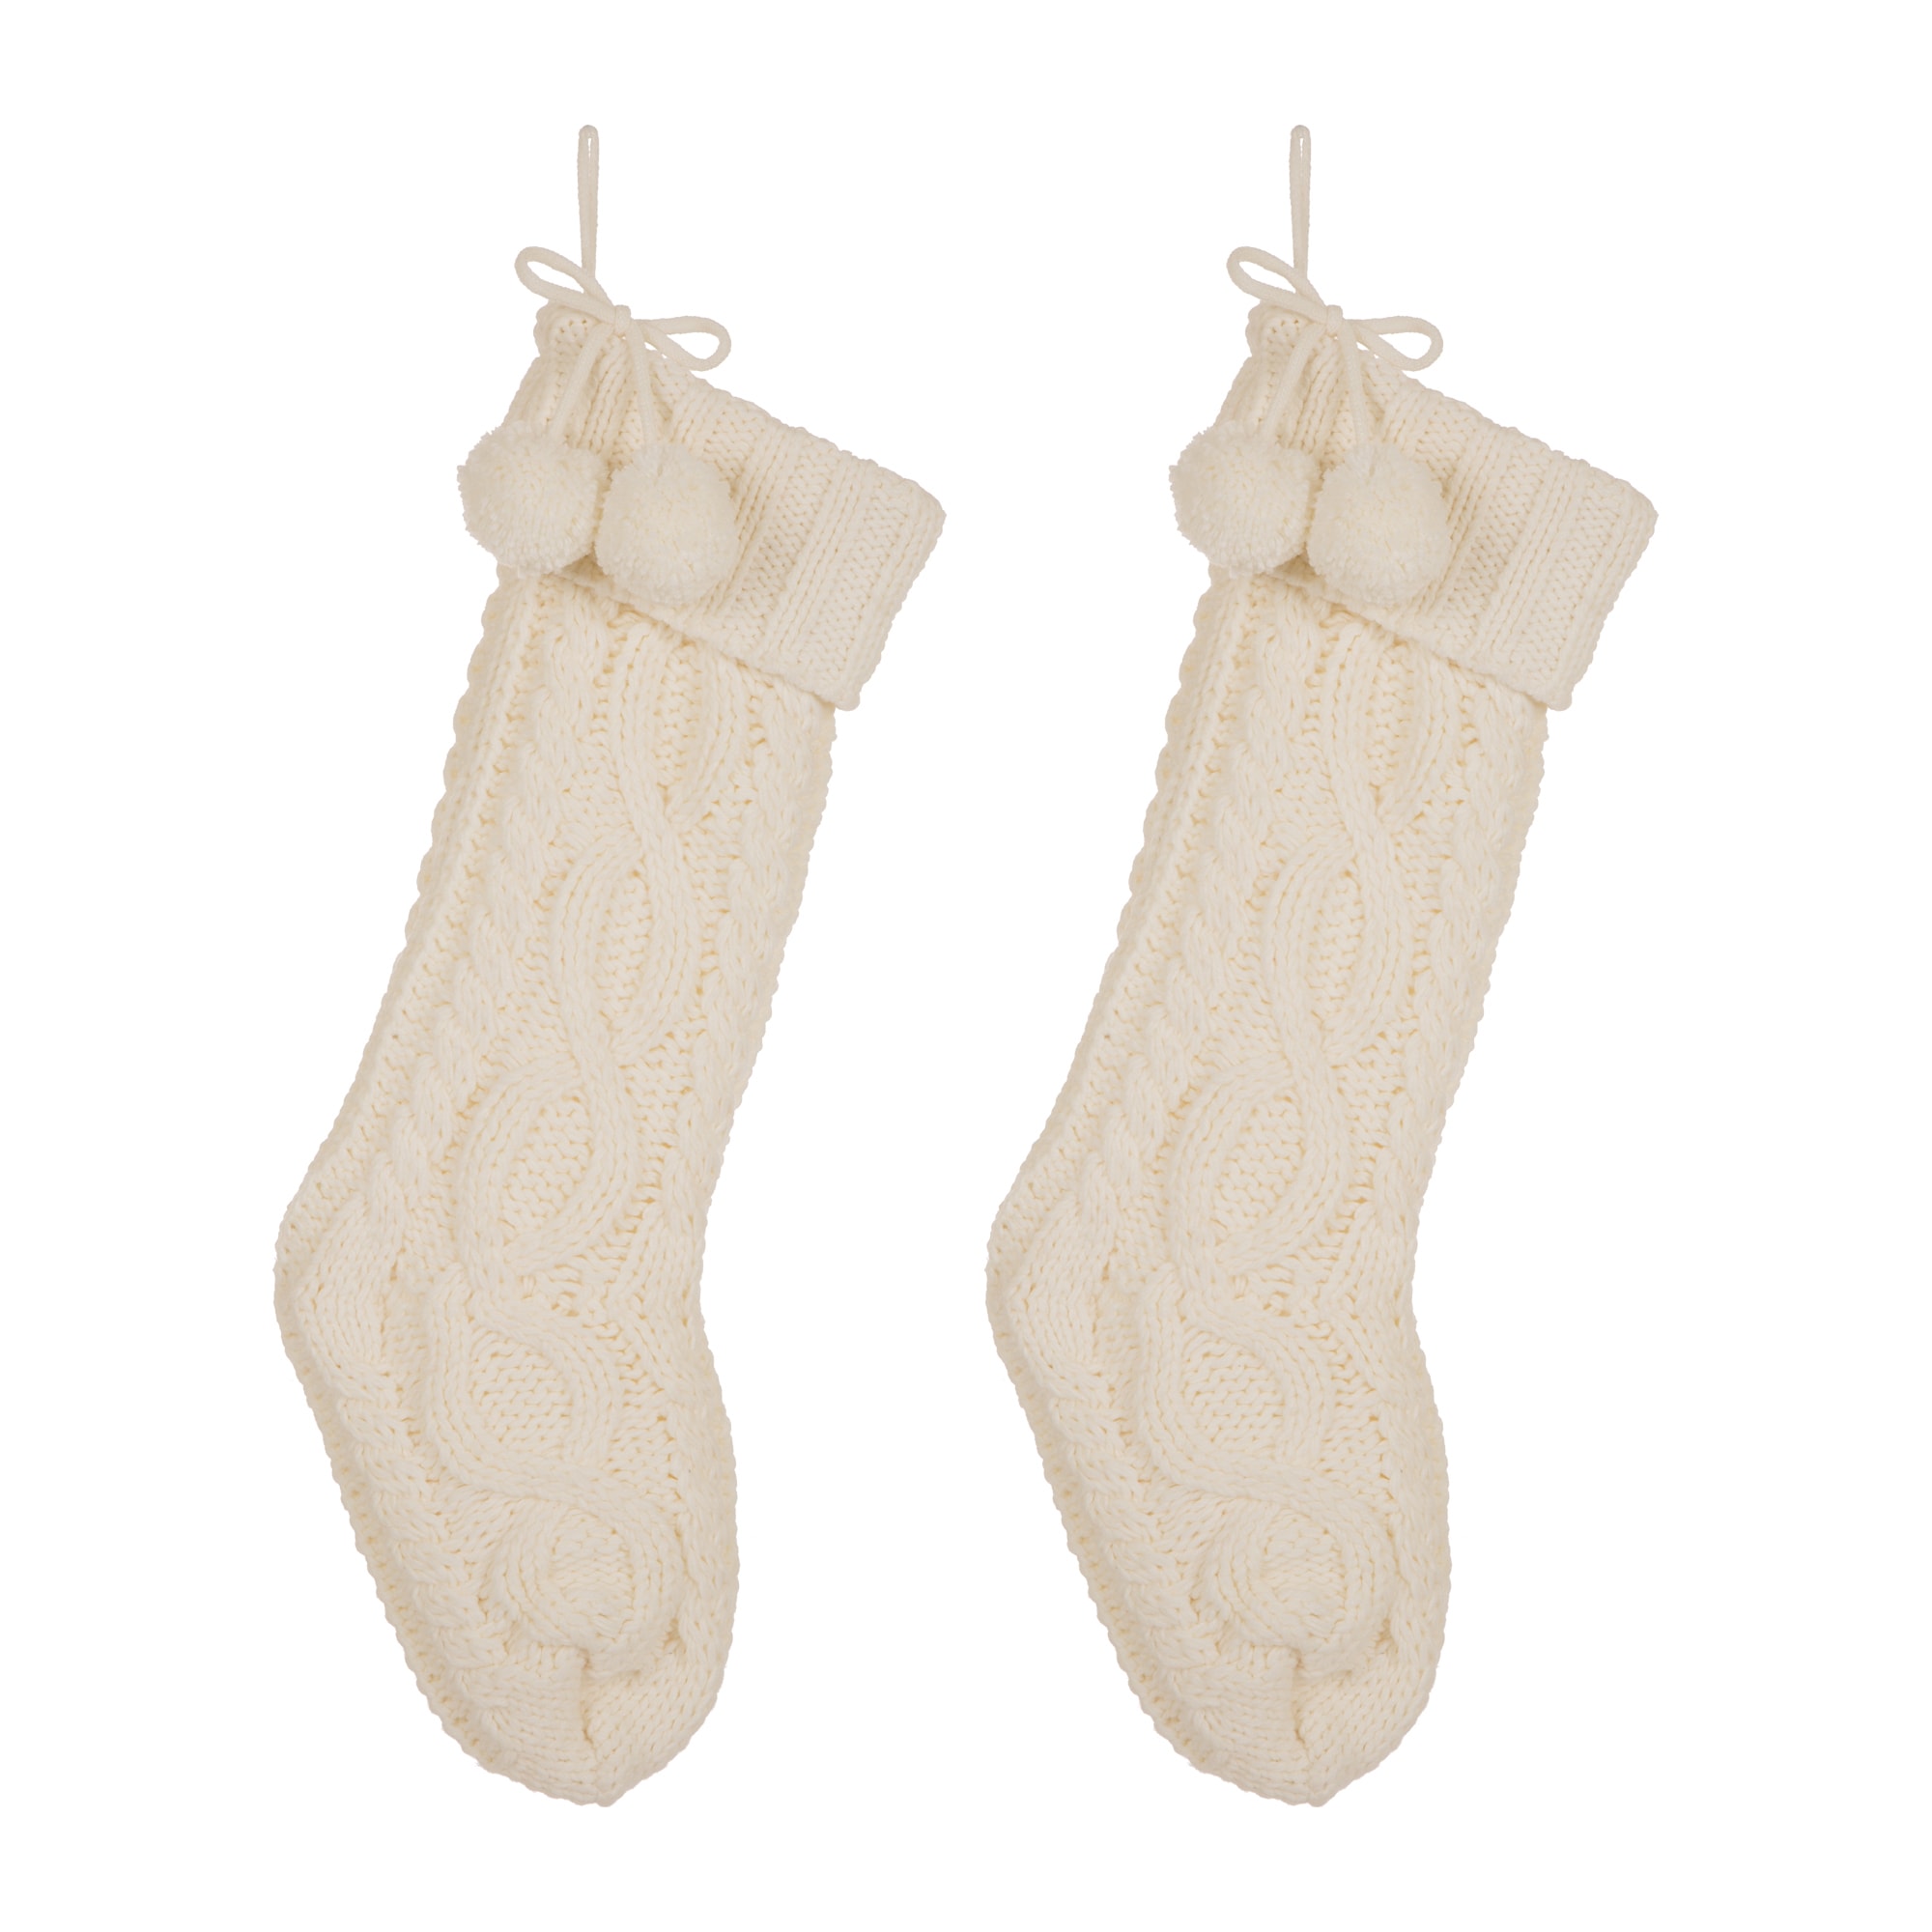 Glitzhome 24-in White Knit Christmas Stocking